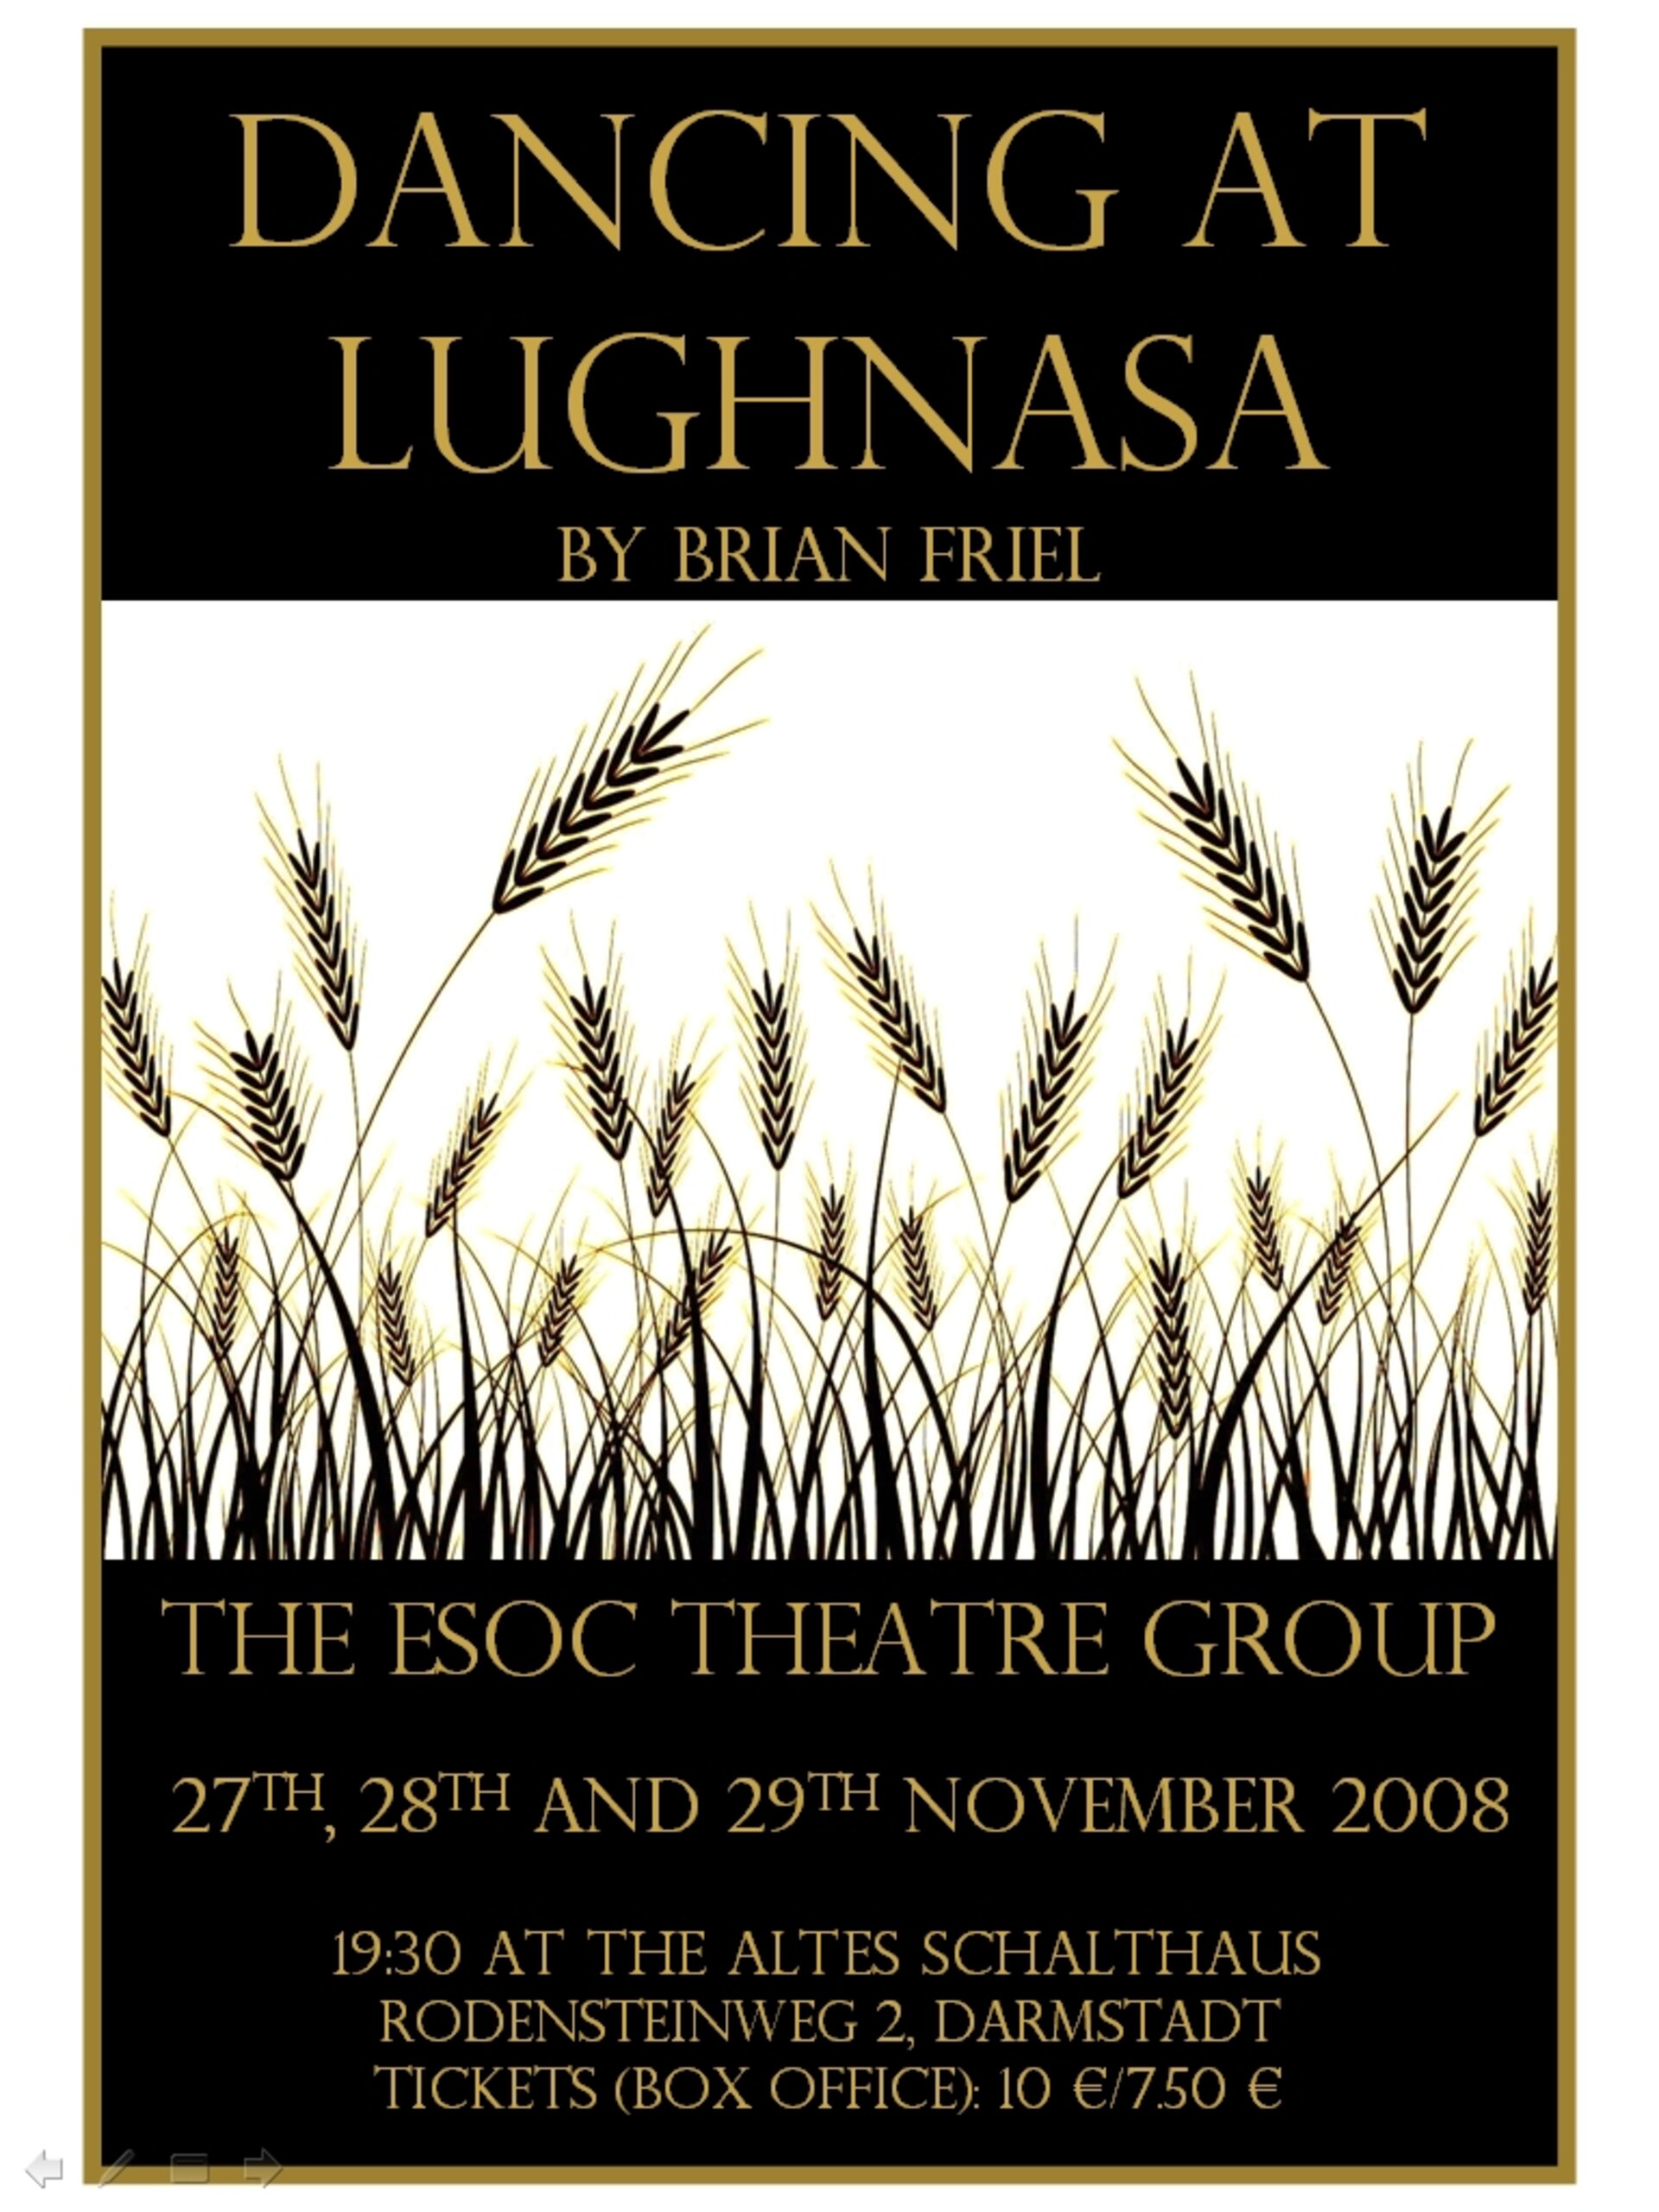 "Dancing at Lughnasa" by Brian Friel, 27, 28, 29 Nov 2008